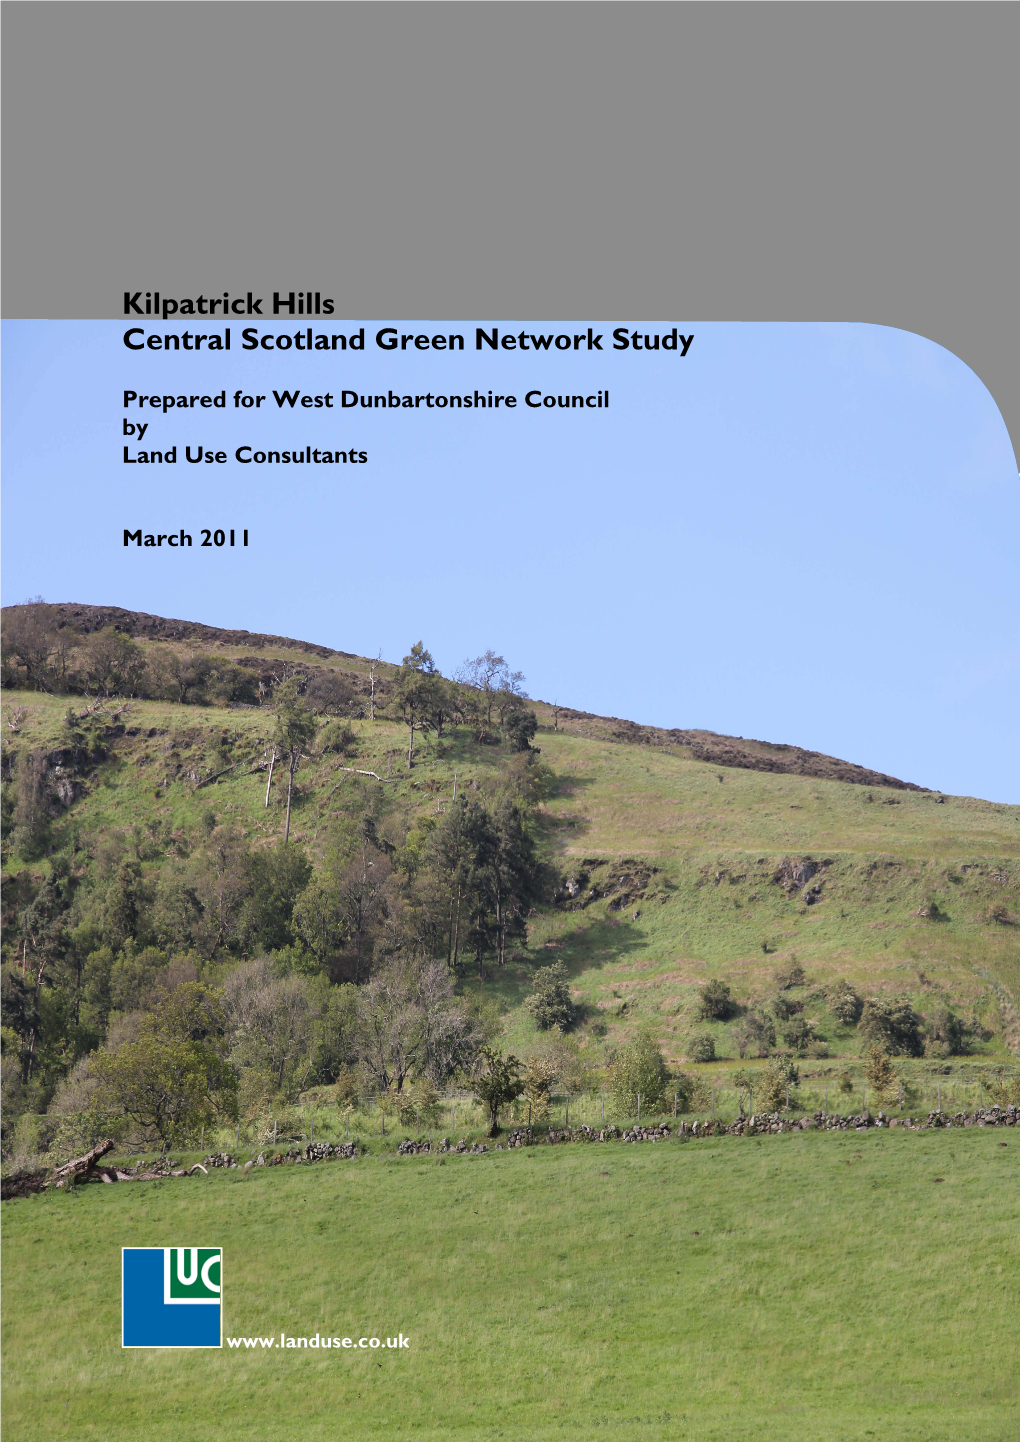 Kilpatrick Hills Central Scotland Green Network Study